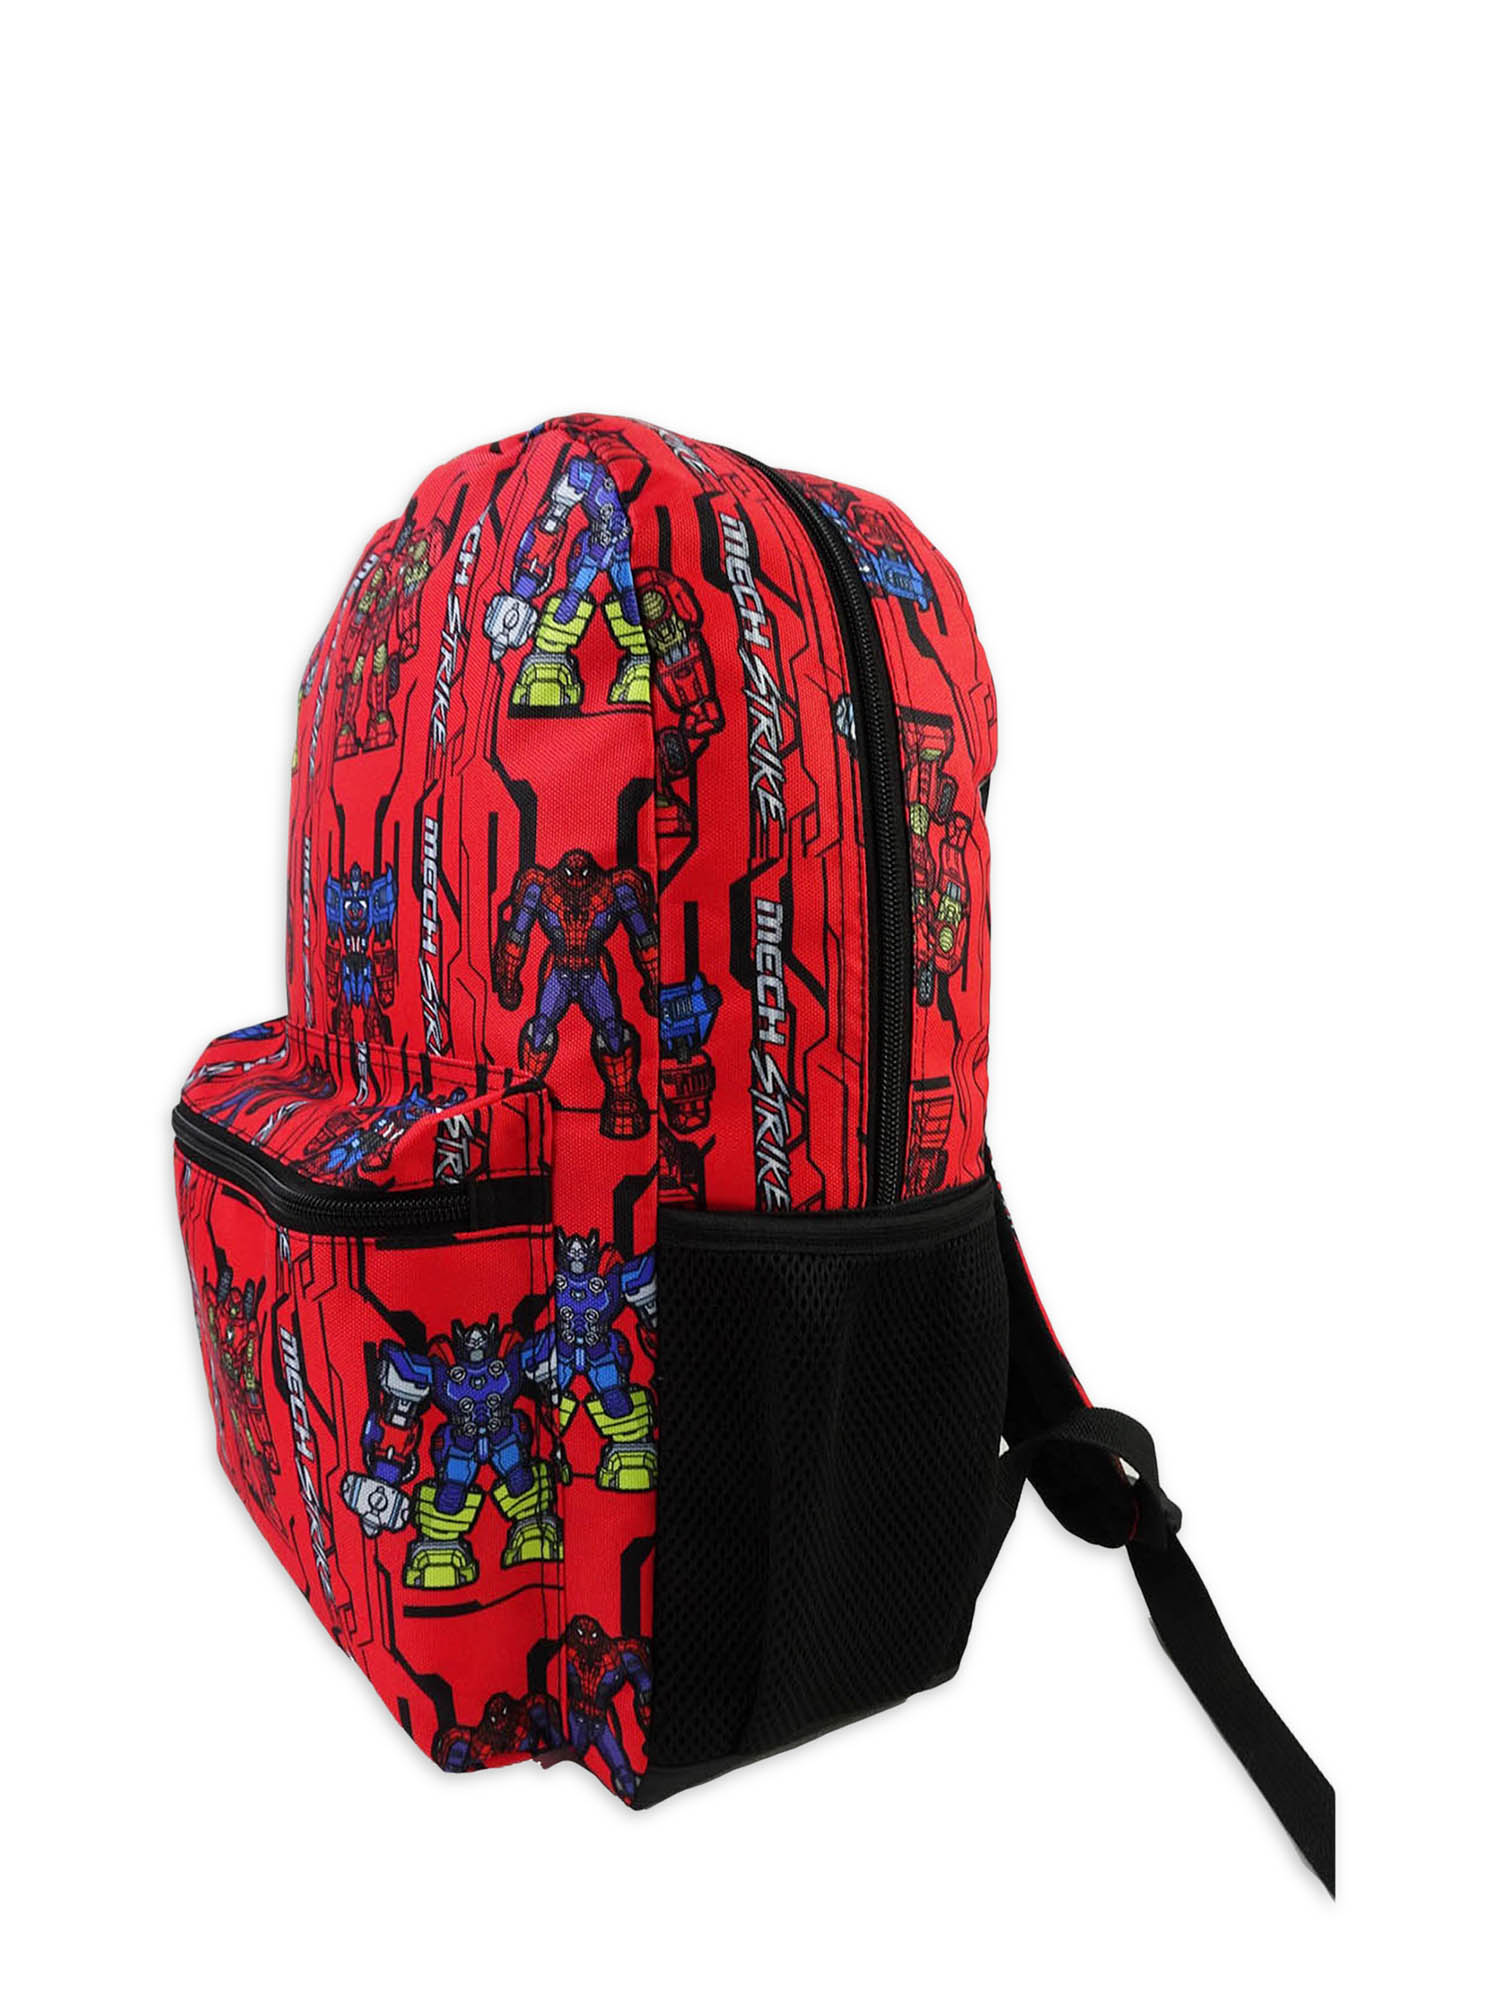 Marvel Spider-Man Mech Strike All over Print Boys' Red Backpack - image 4 of 5